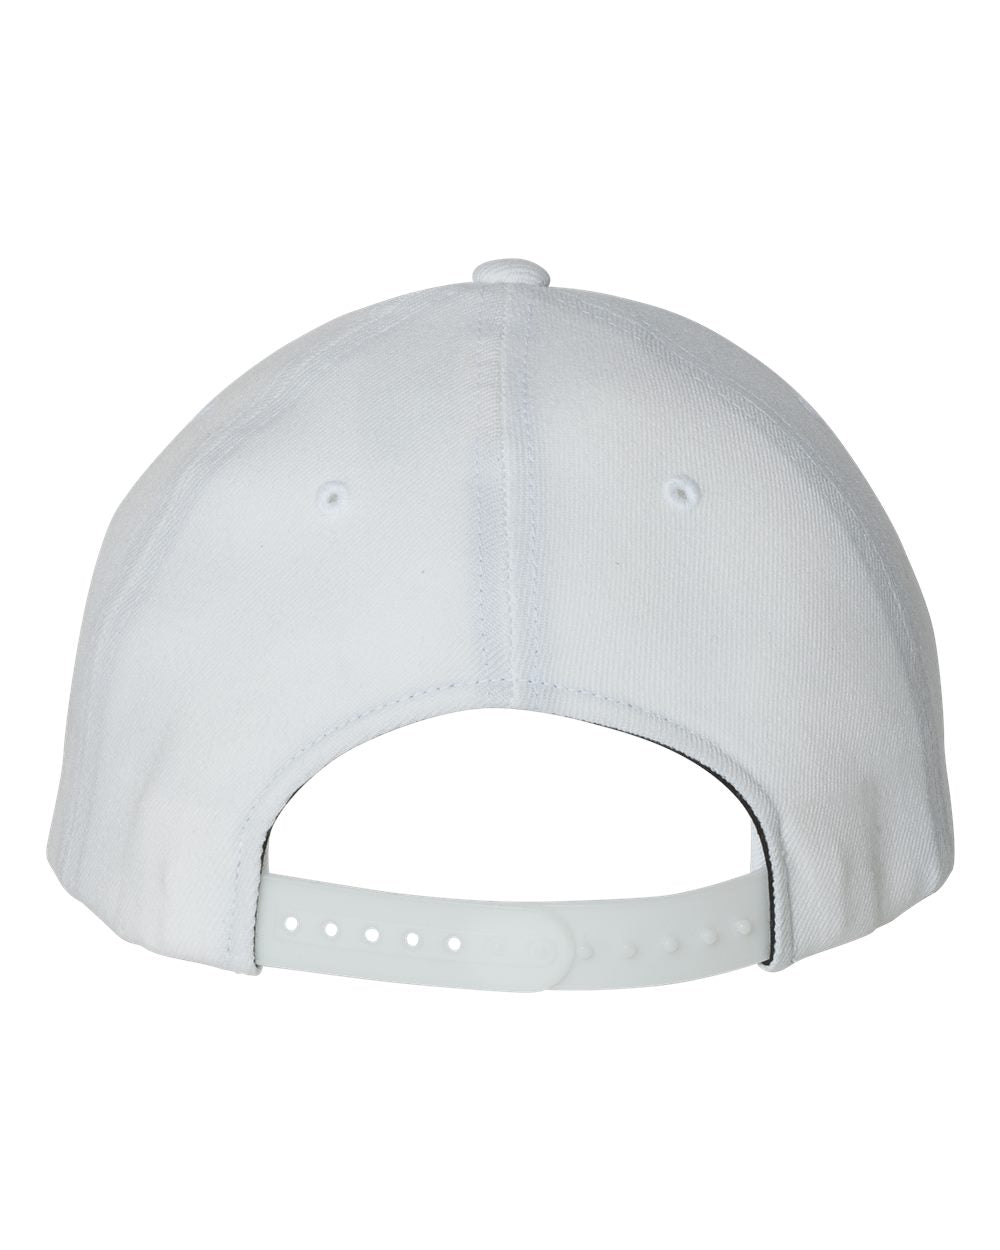 Back view of Flexfit 110F custom hat in white